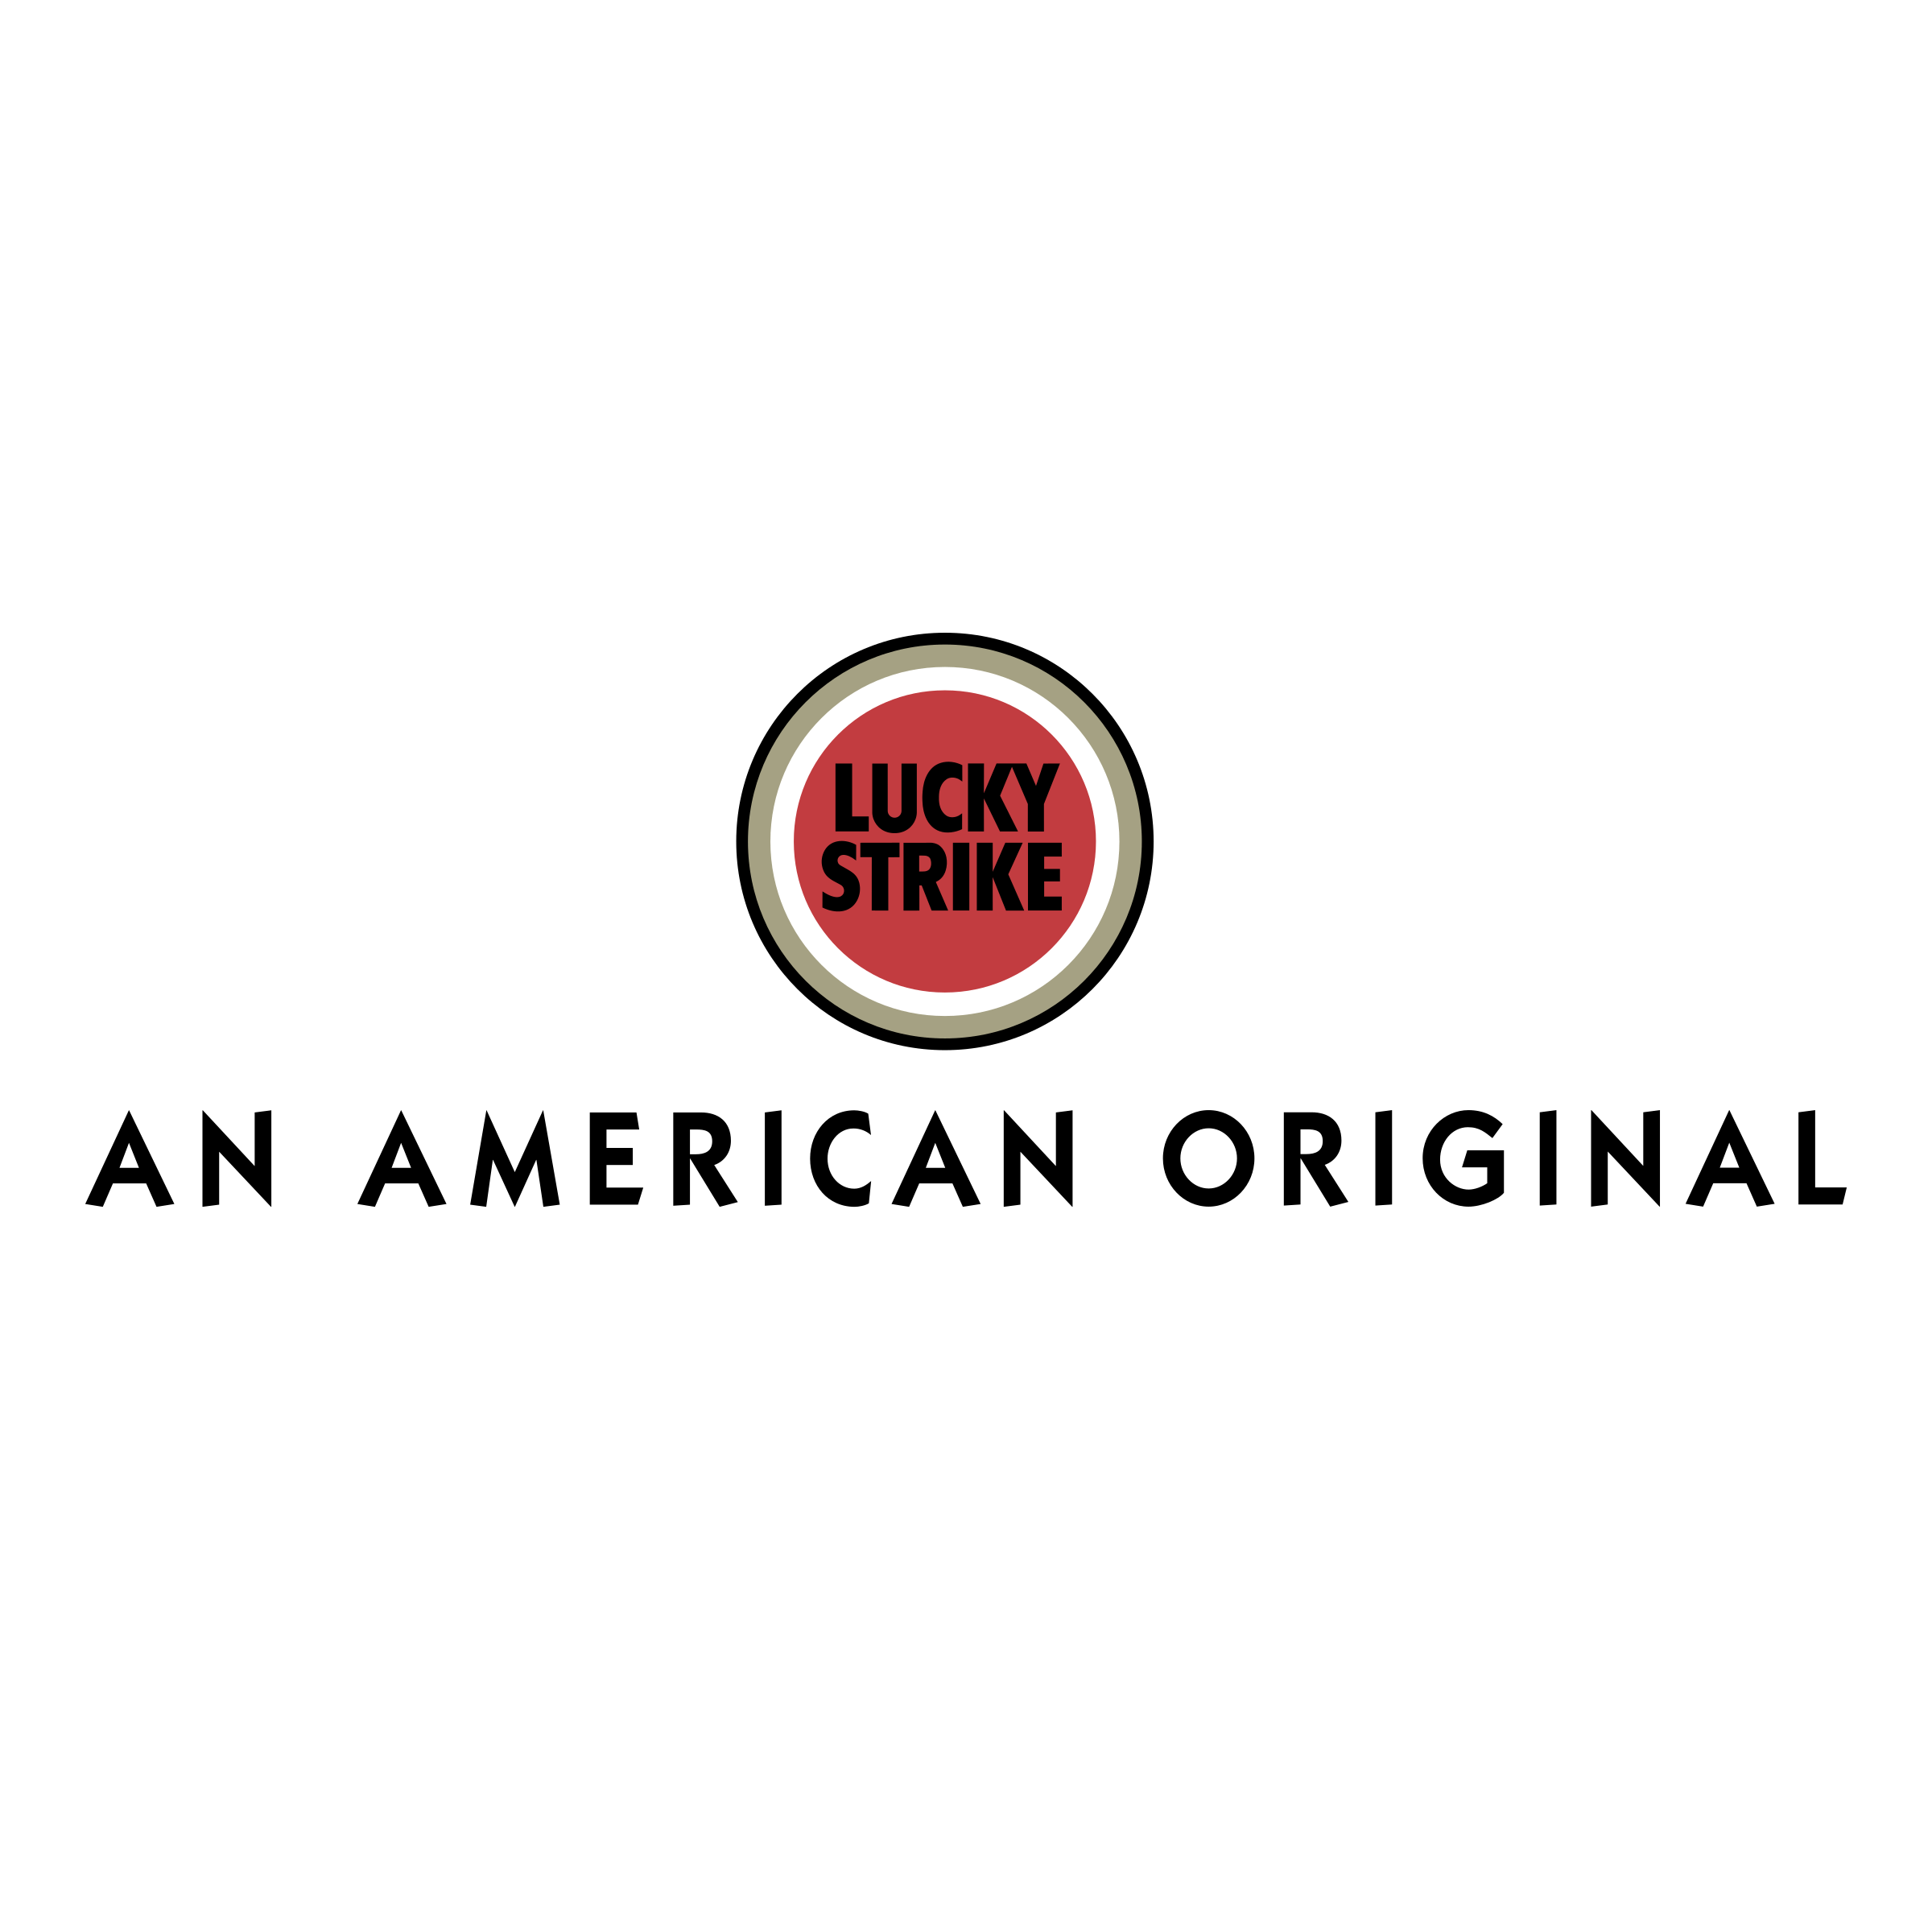 Strike Logo - Lucky Strike Logo PNG Transparent & SVG Vector - Freebie Supply